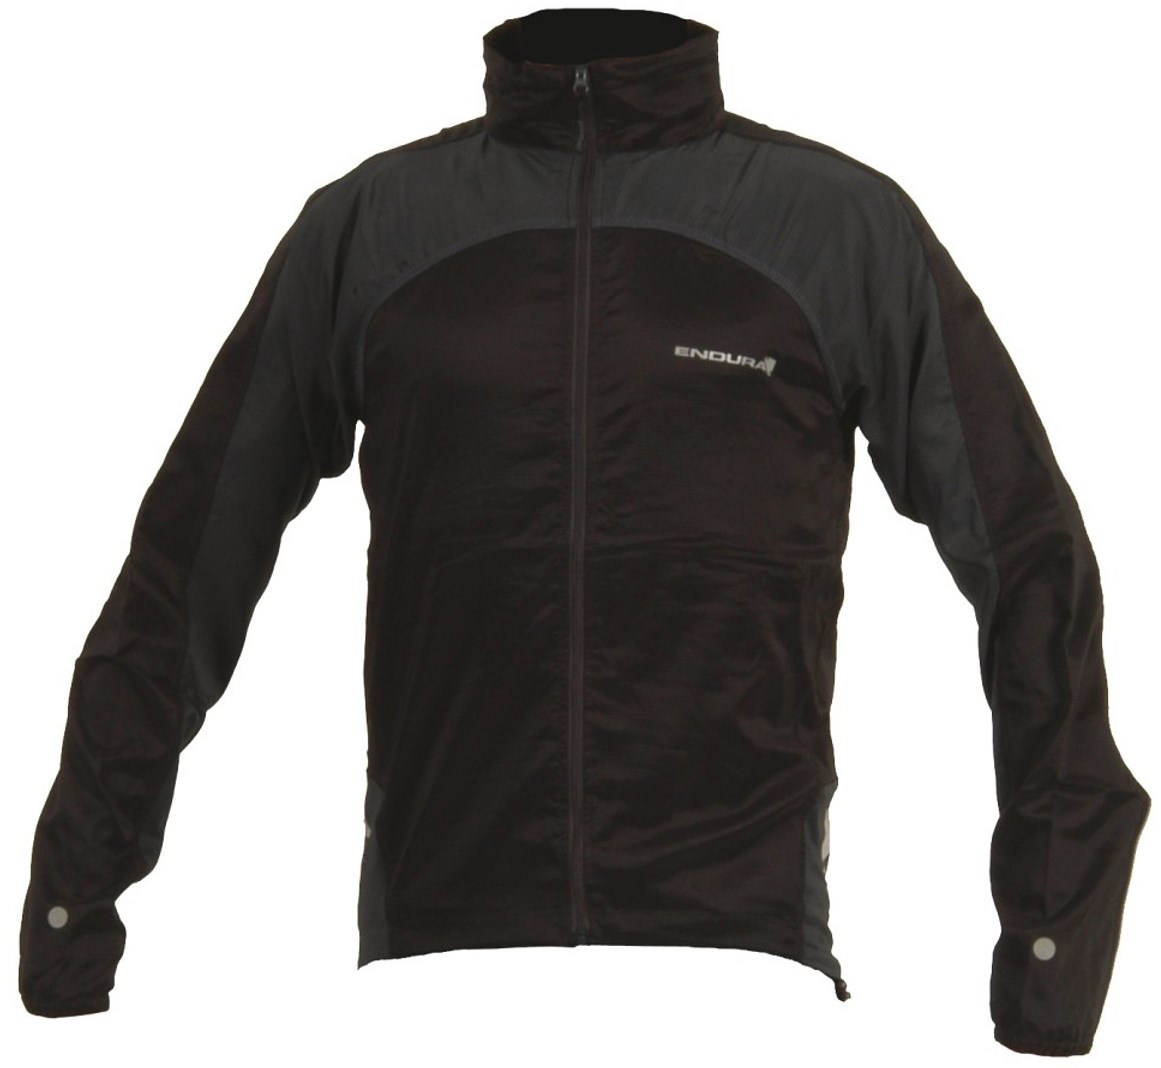 Endura Rebound Showerproof Cycling Jacket 2012 product image